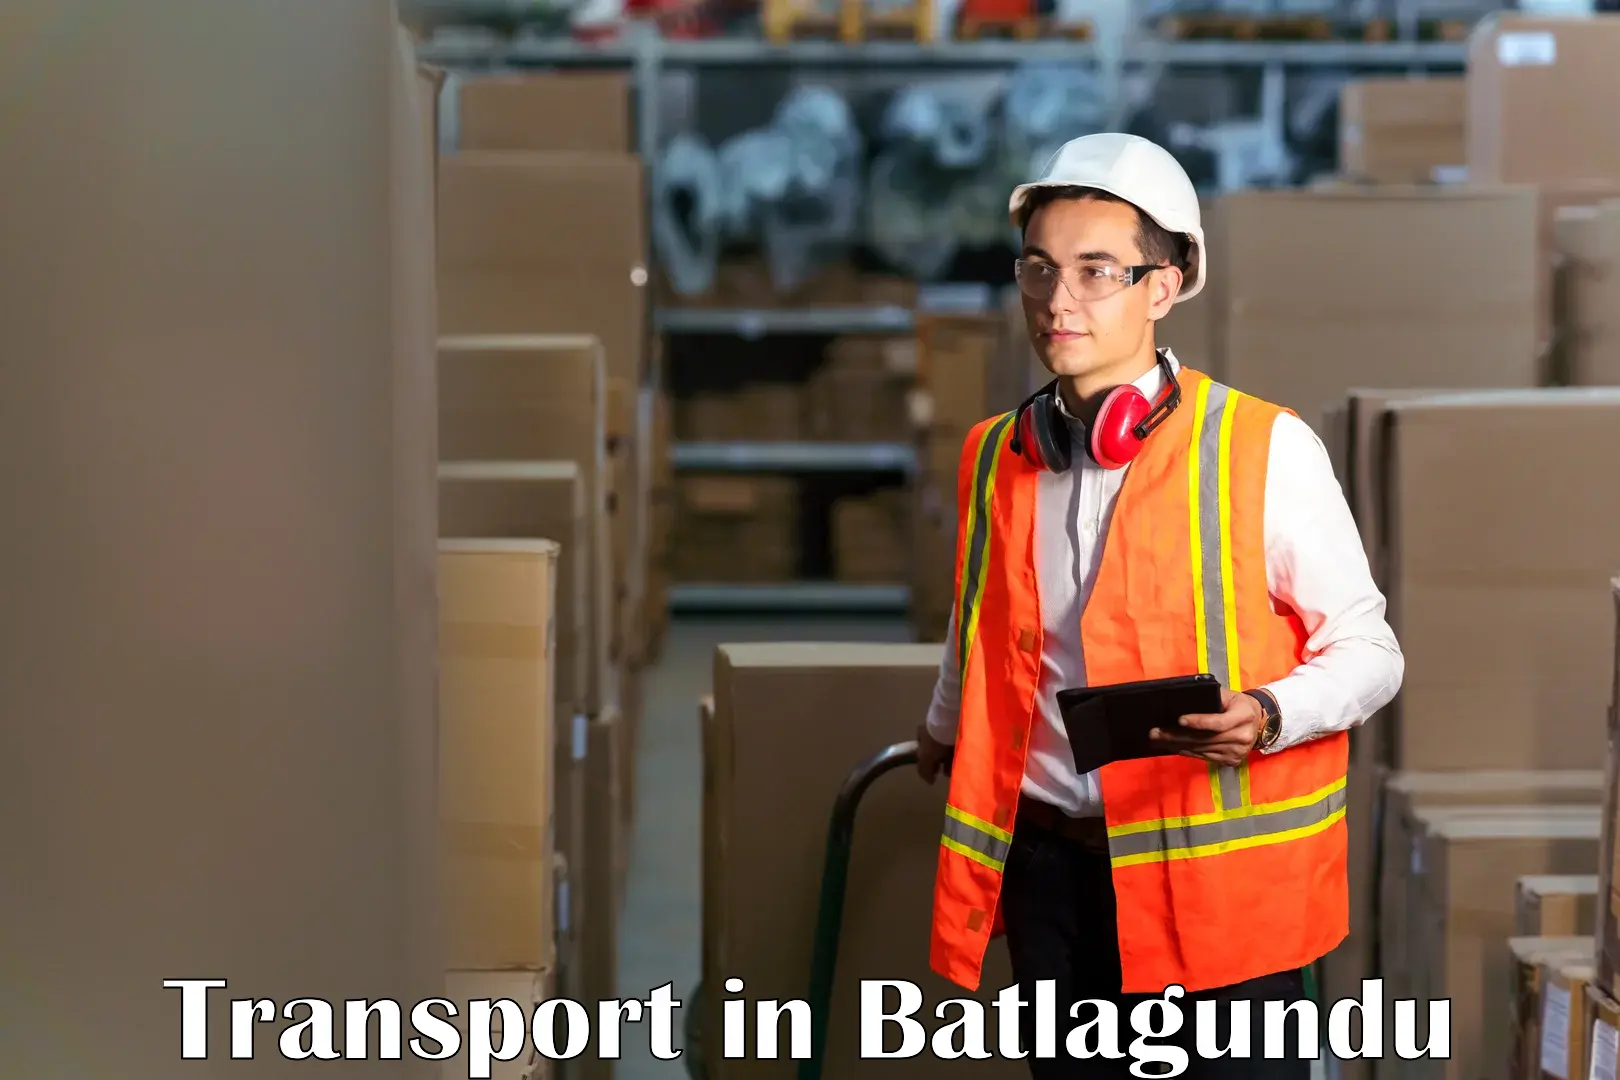 Interstate goods transport in Batlagundu